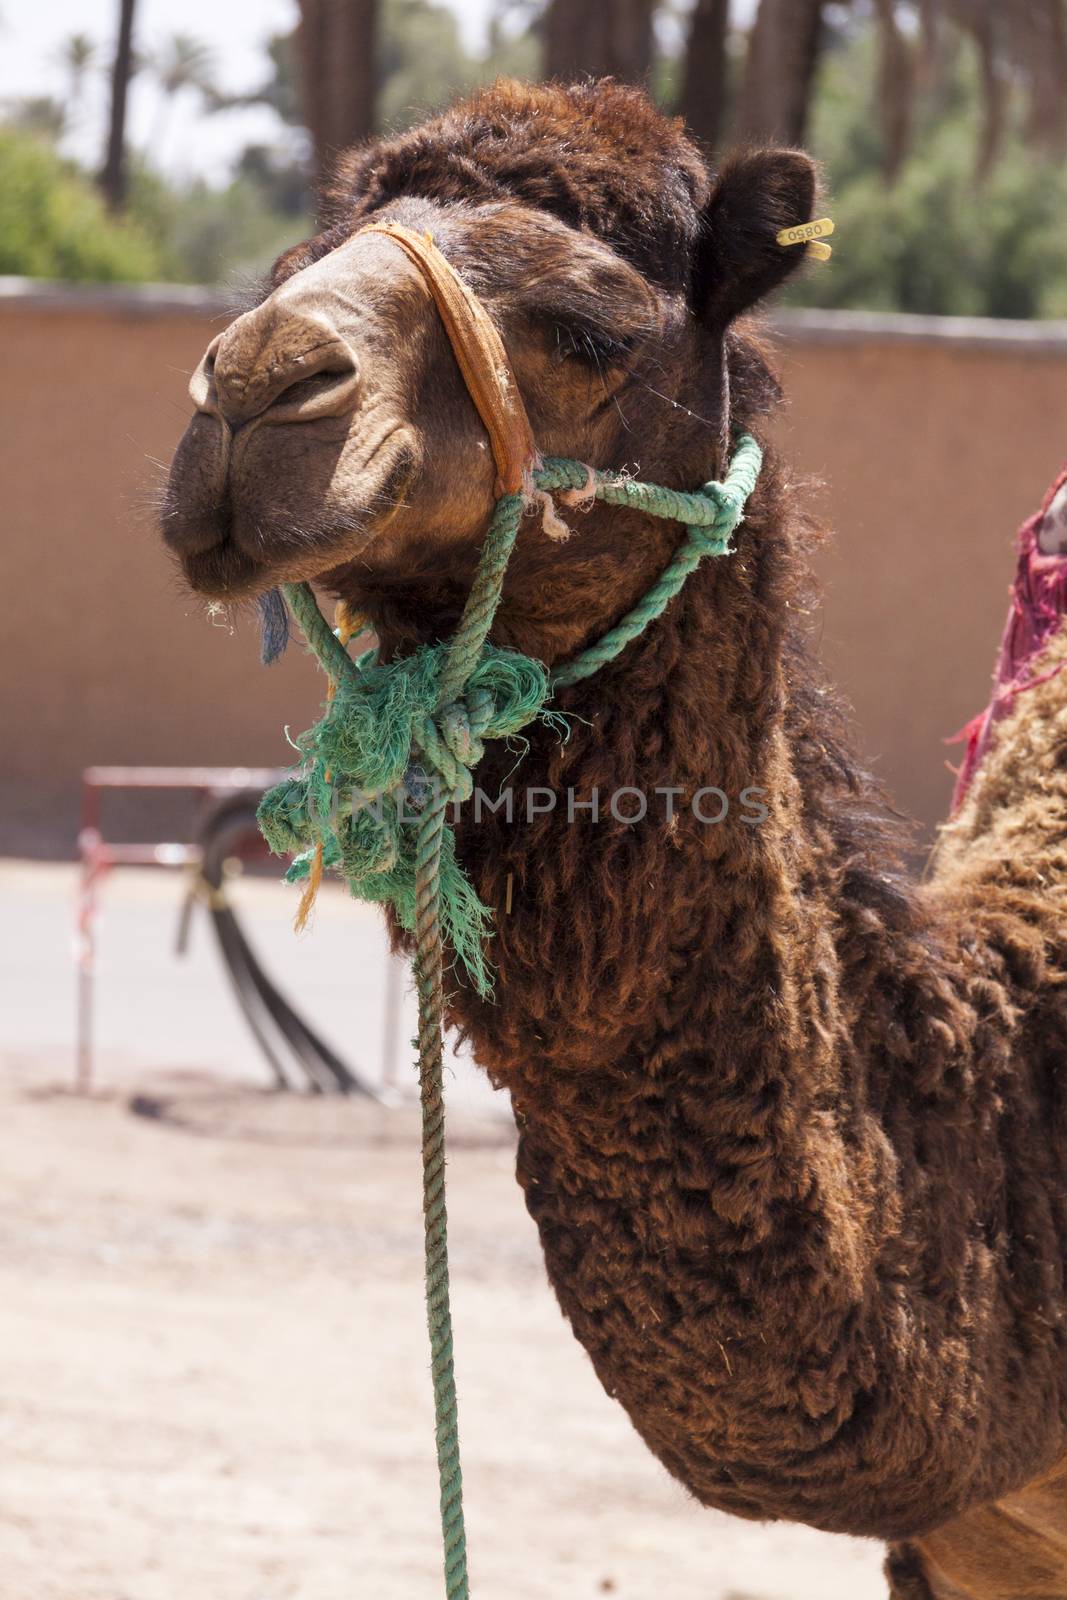 Camel in Marrakesch, Morocco by juniart